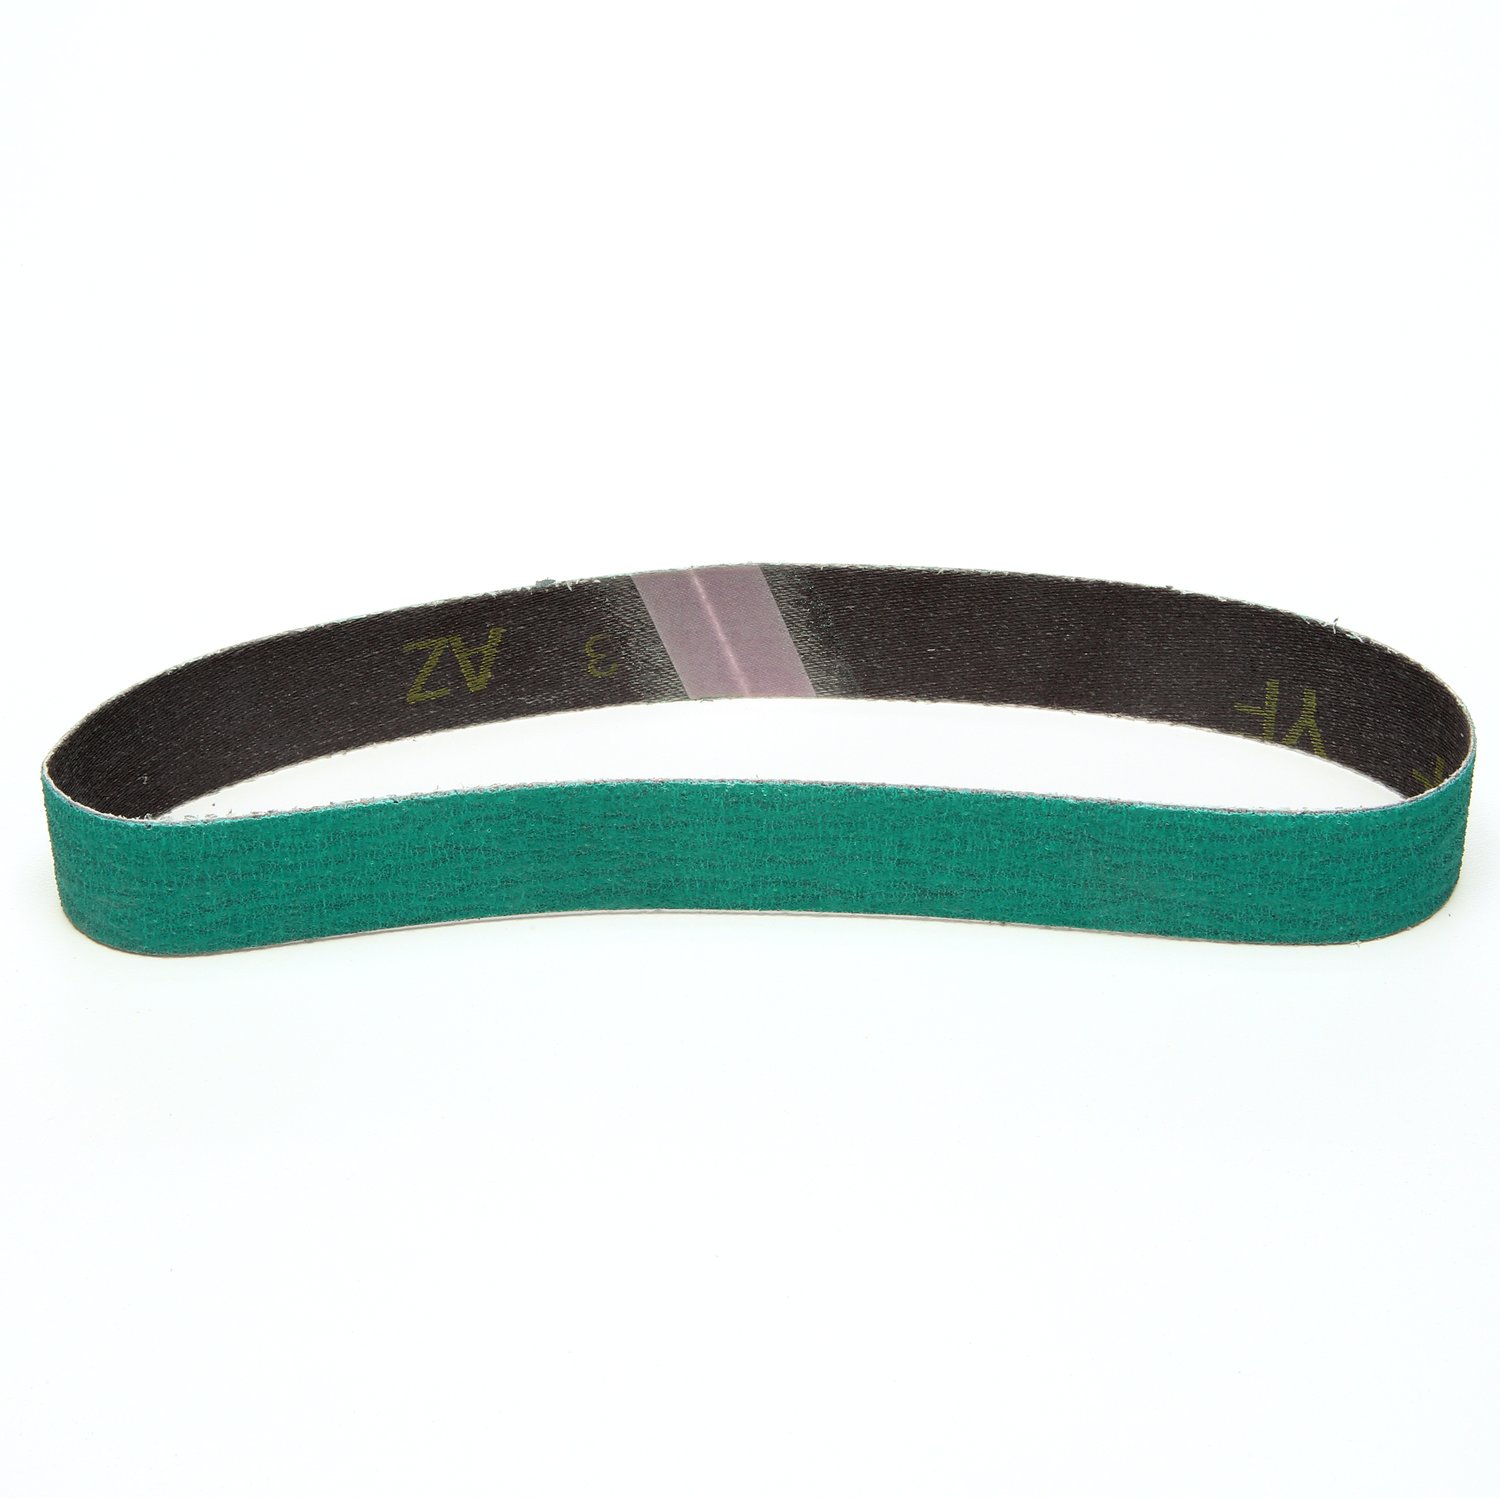 7010514531 - 3M Cloth Belt 577F, 40 YF-weight, 1/2 in x 12 in, Fabri-lok,
Single-flex